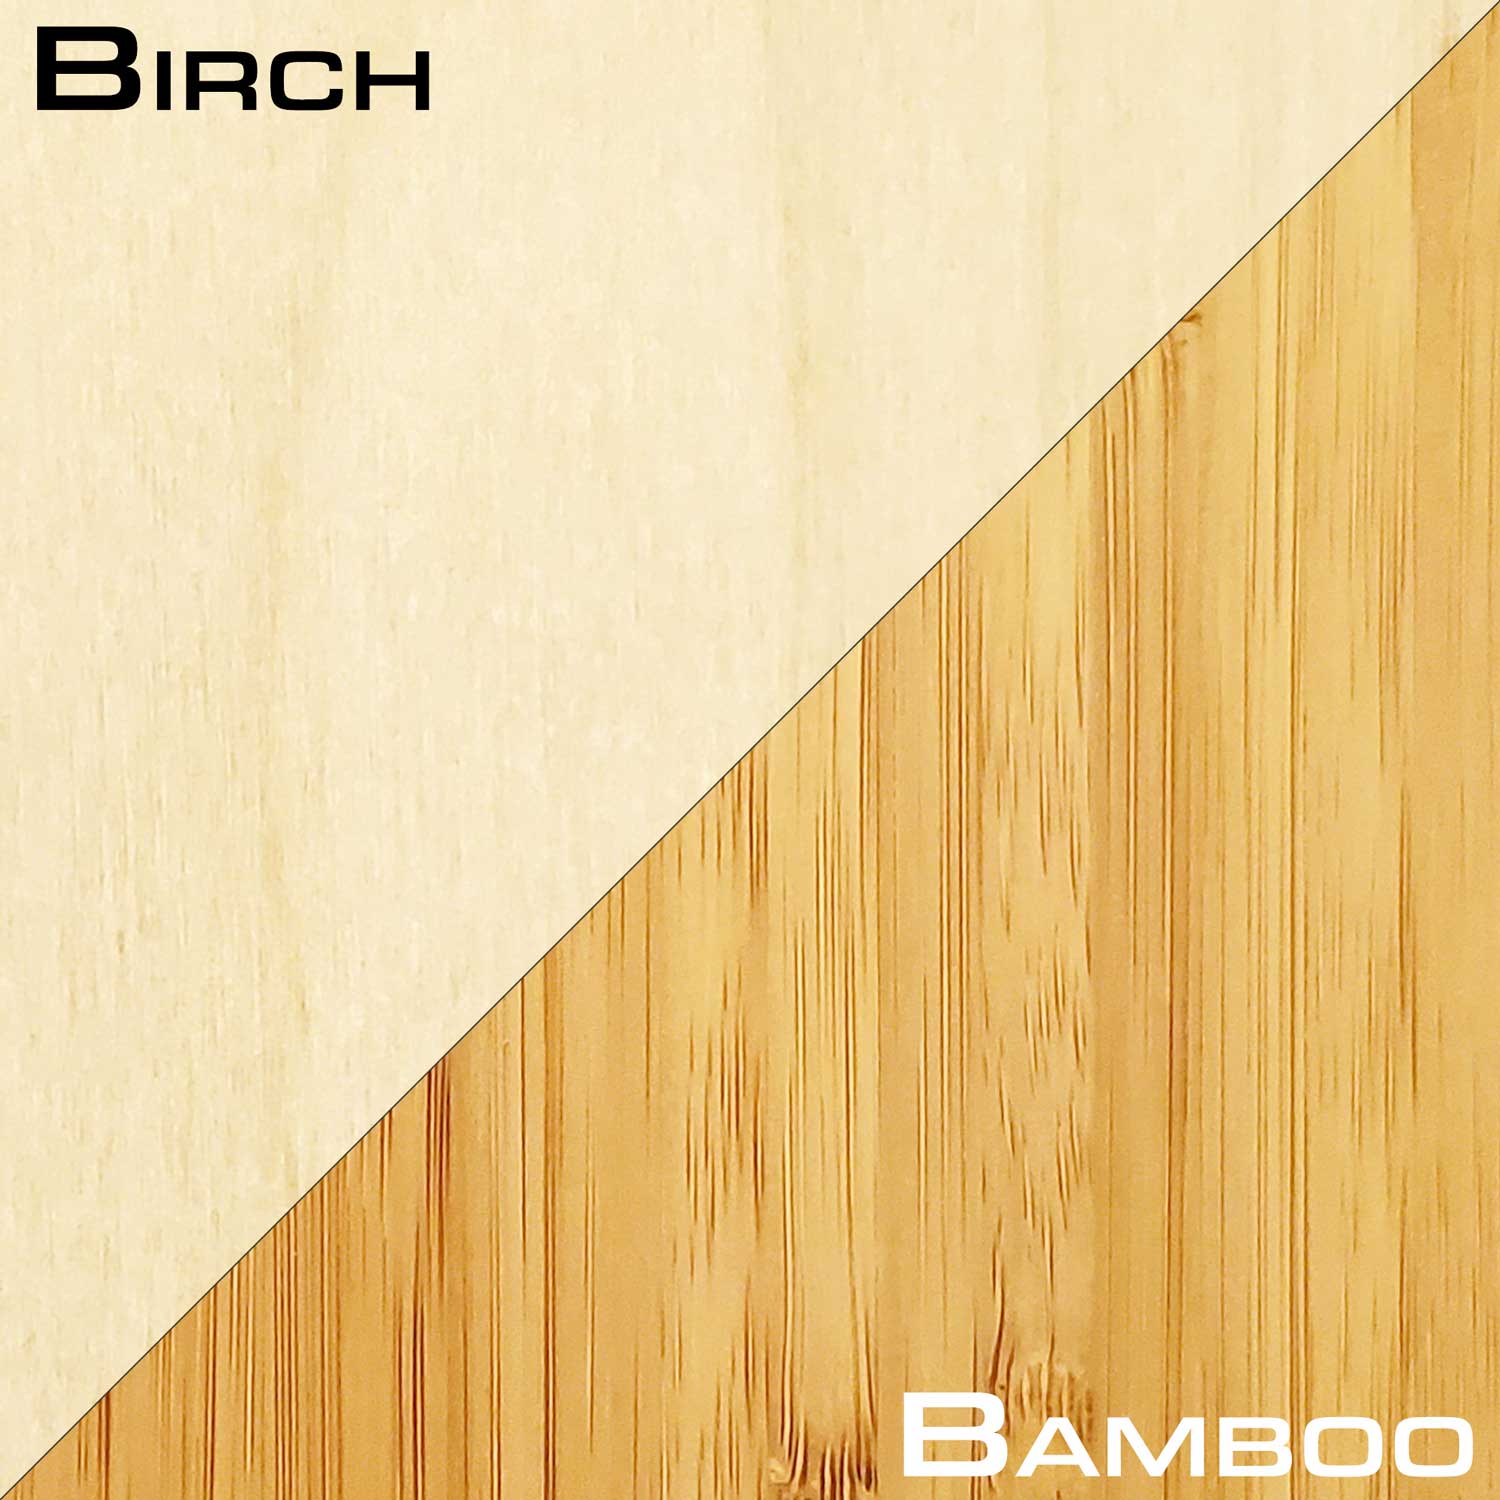 Birch and Bamboo Comparison